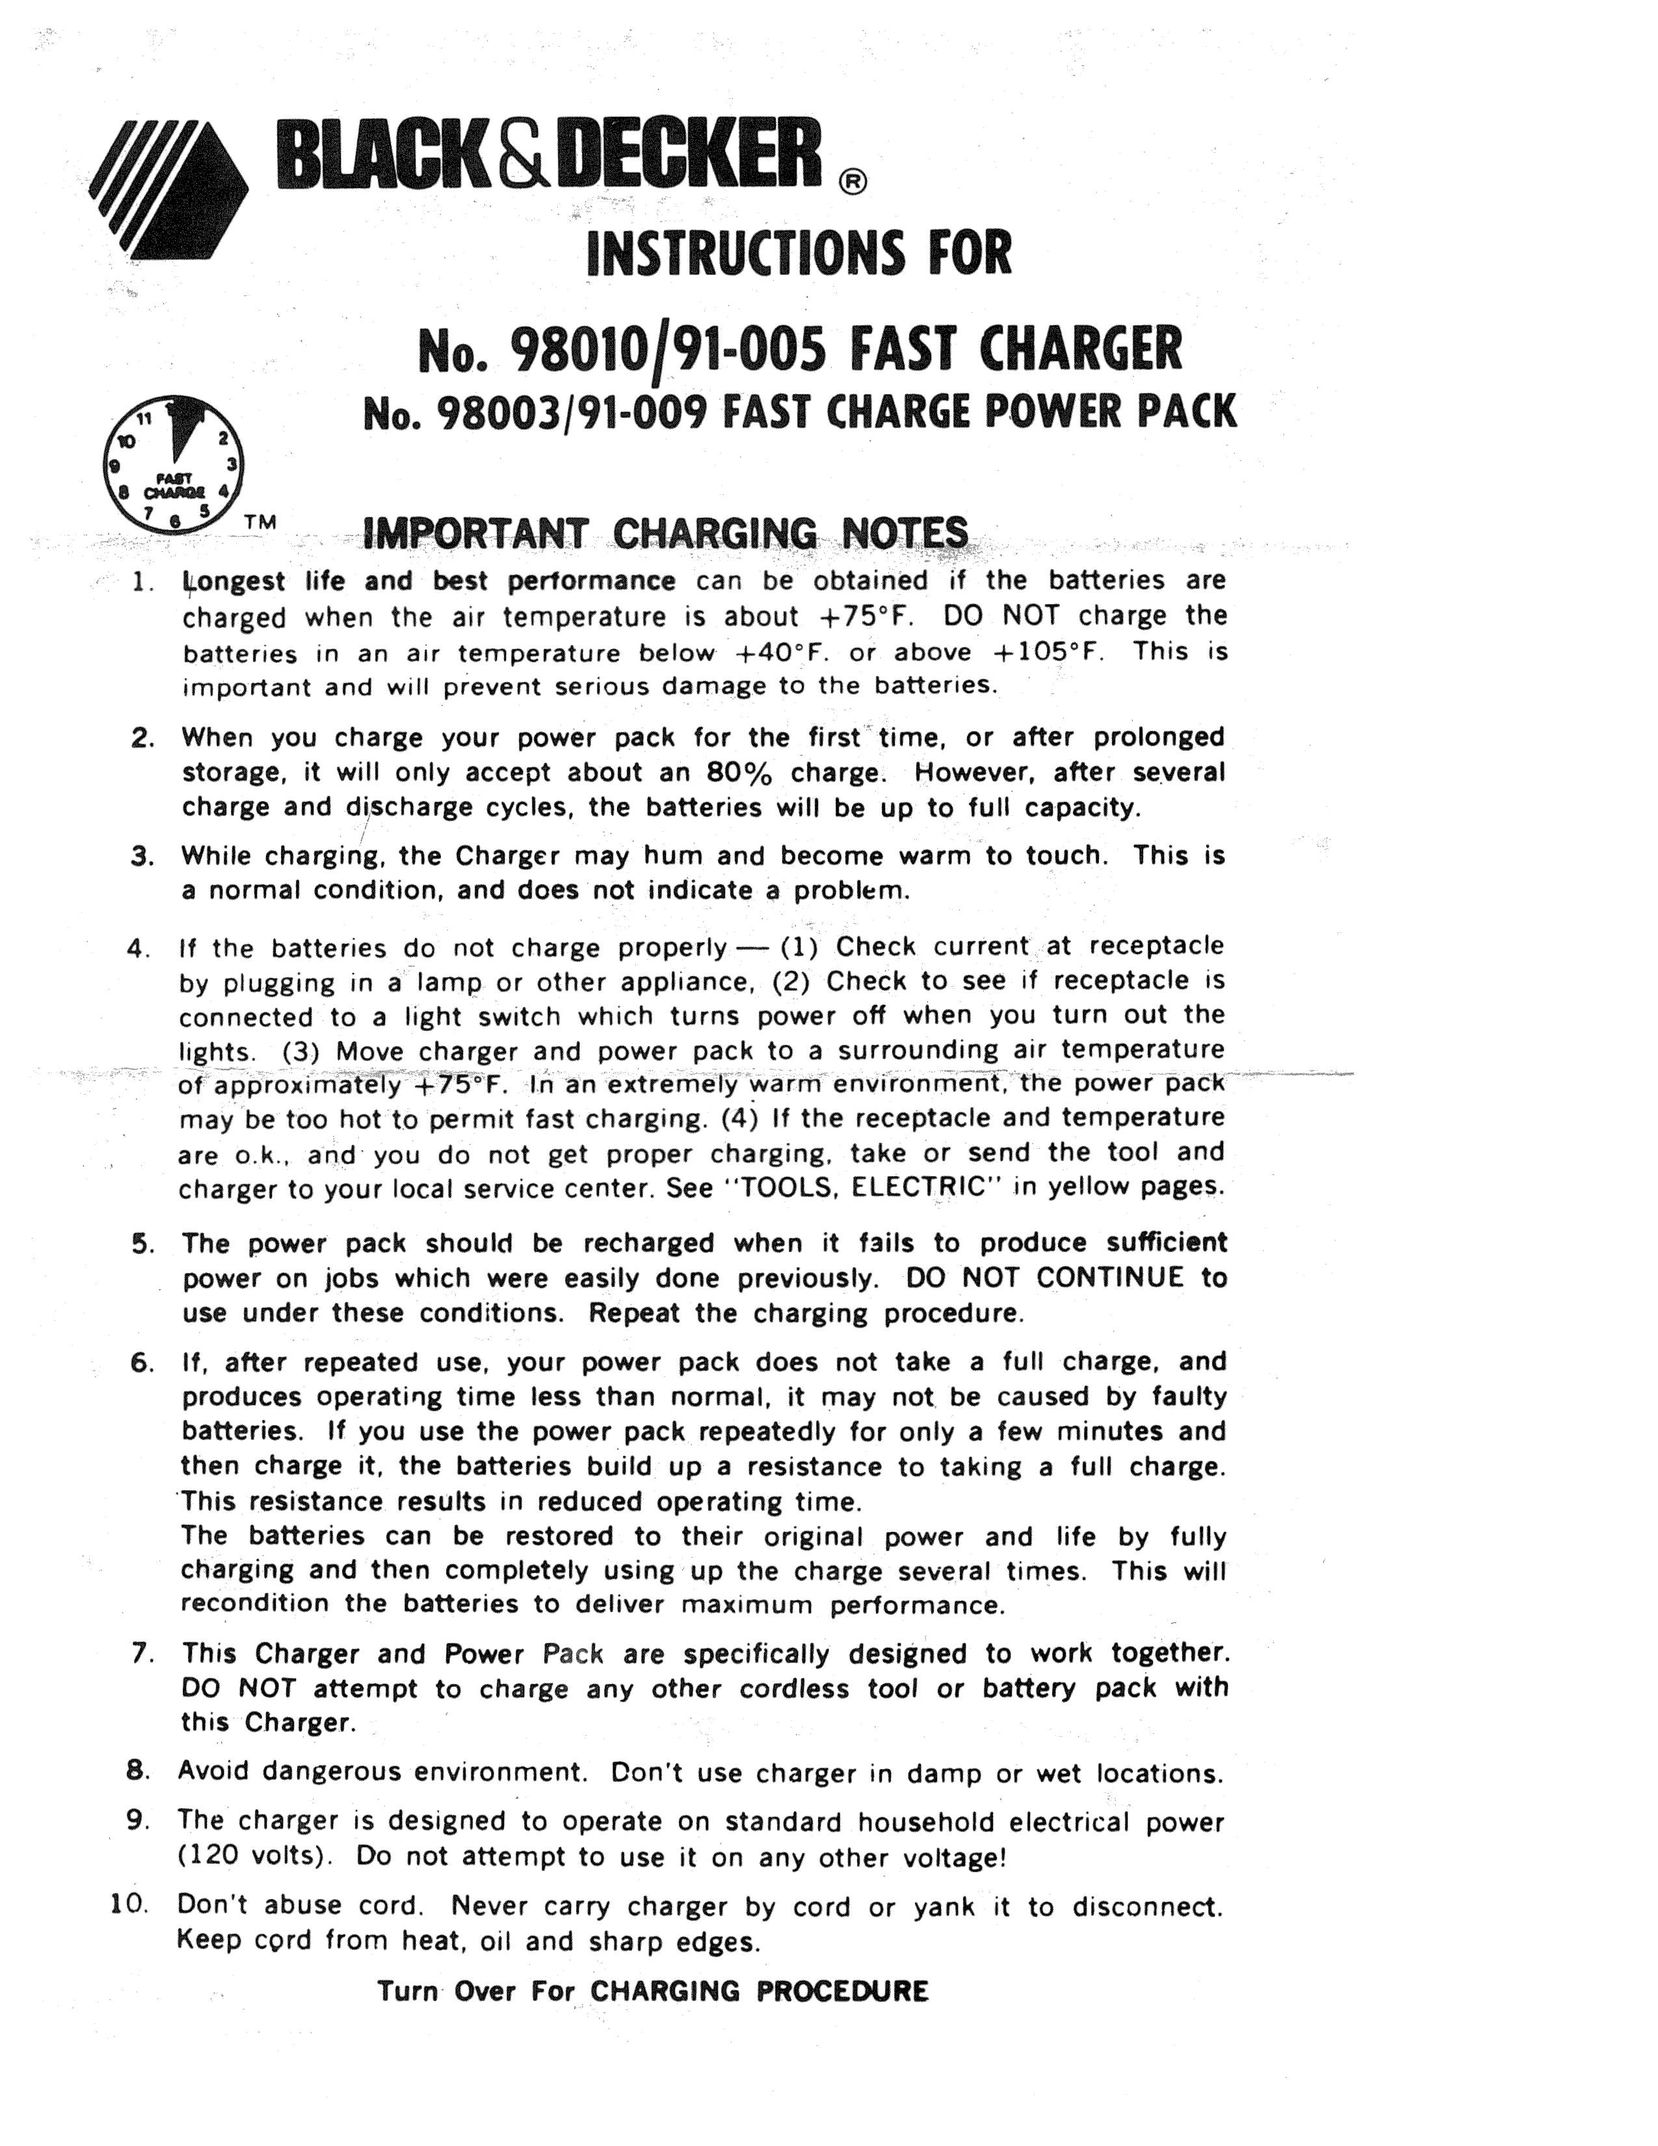 Black & Decker 91-009 Battery Charger User Manual